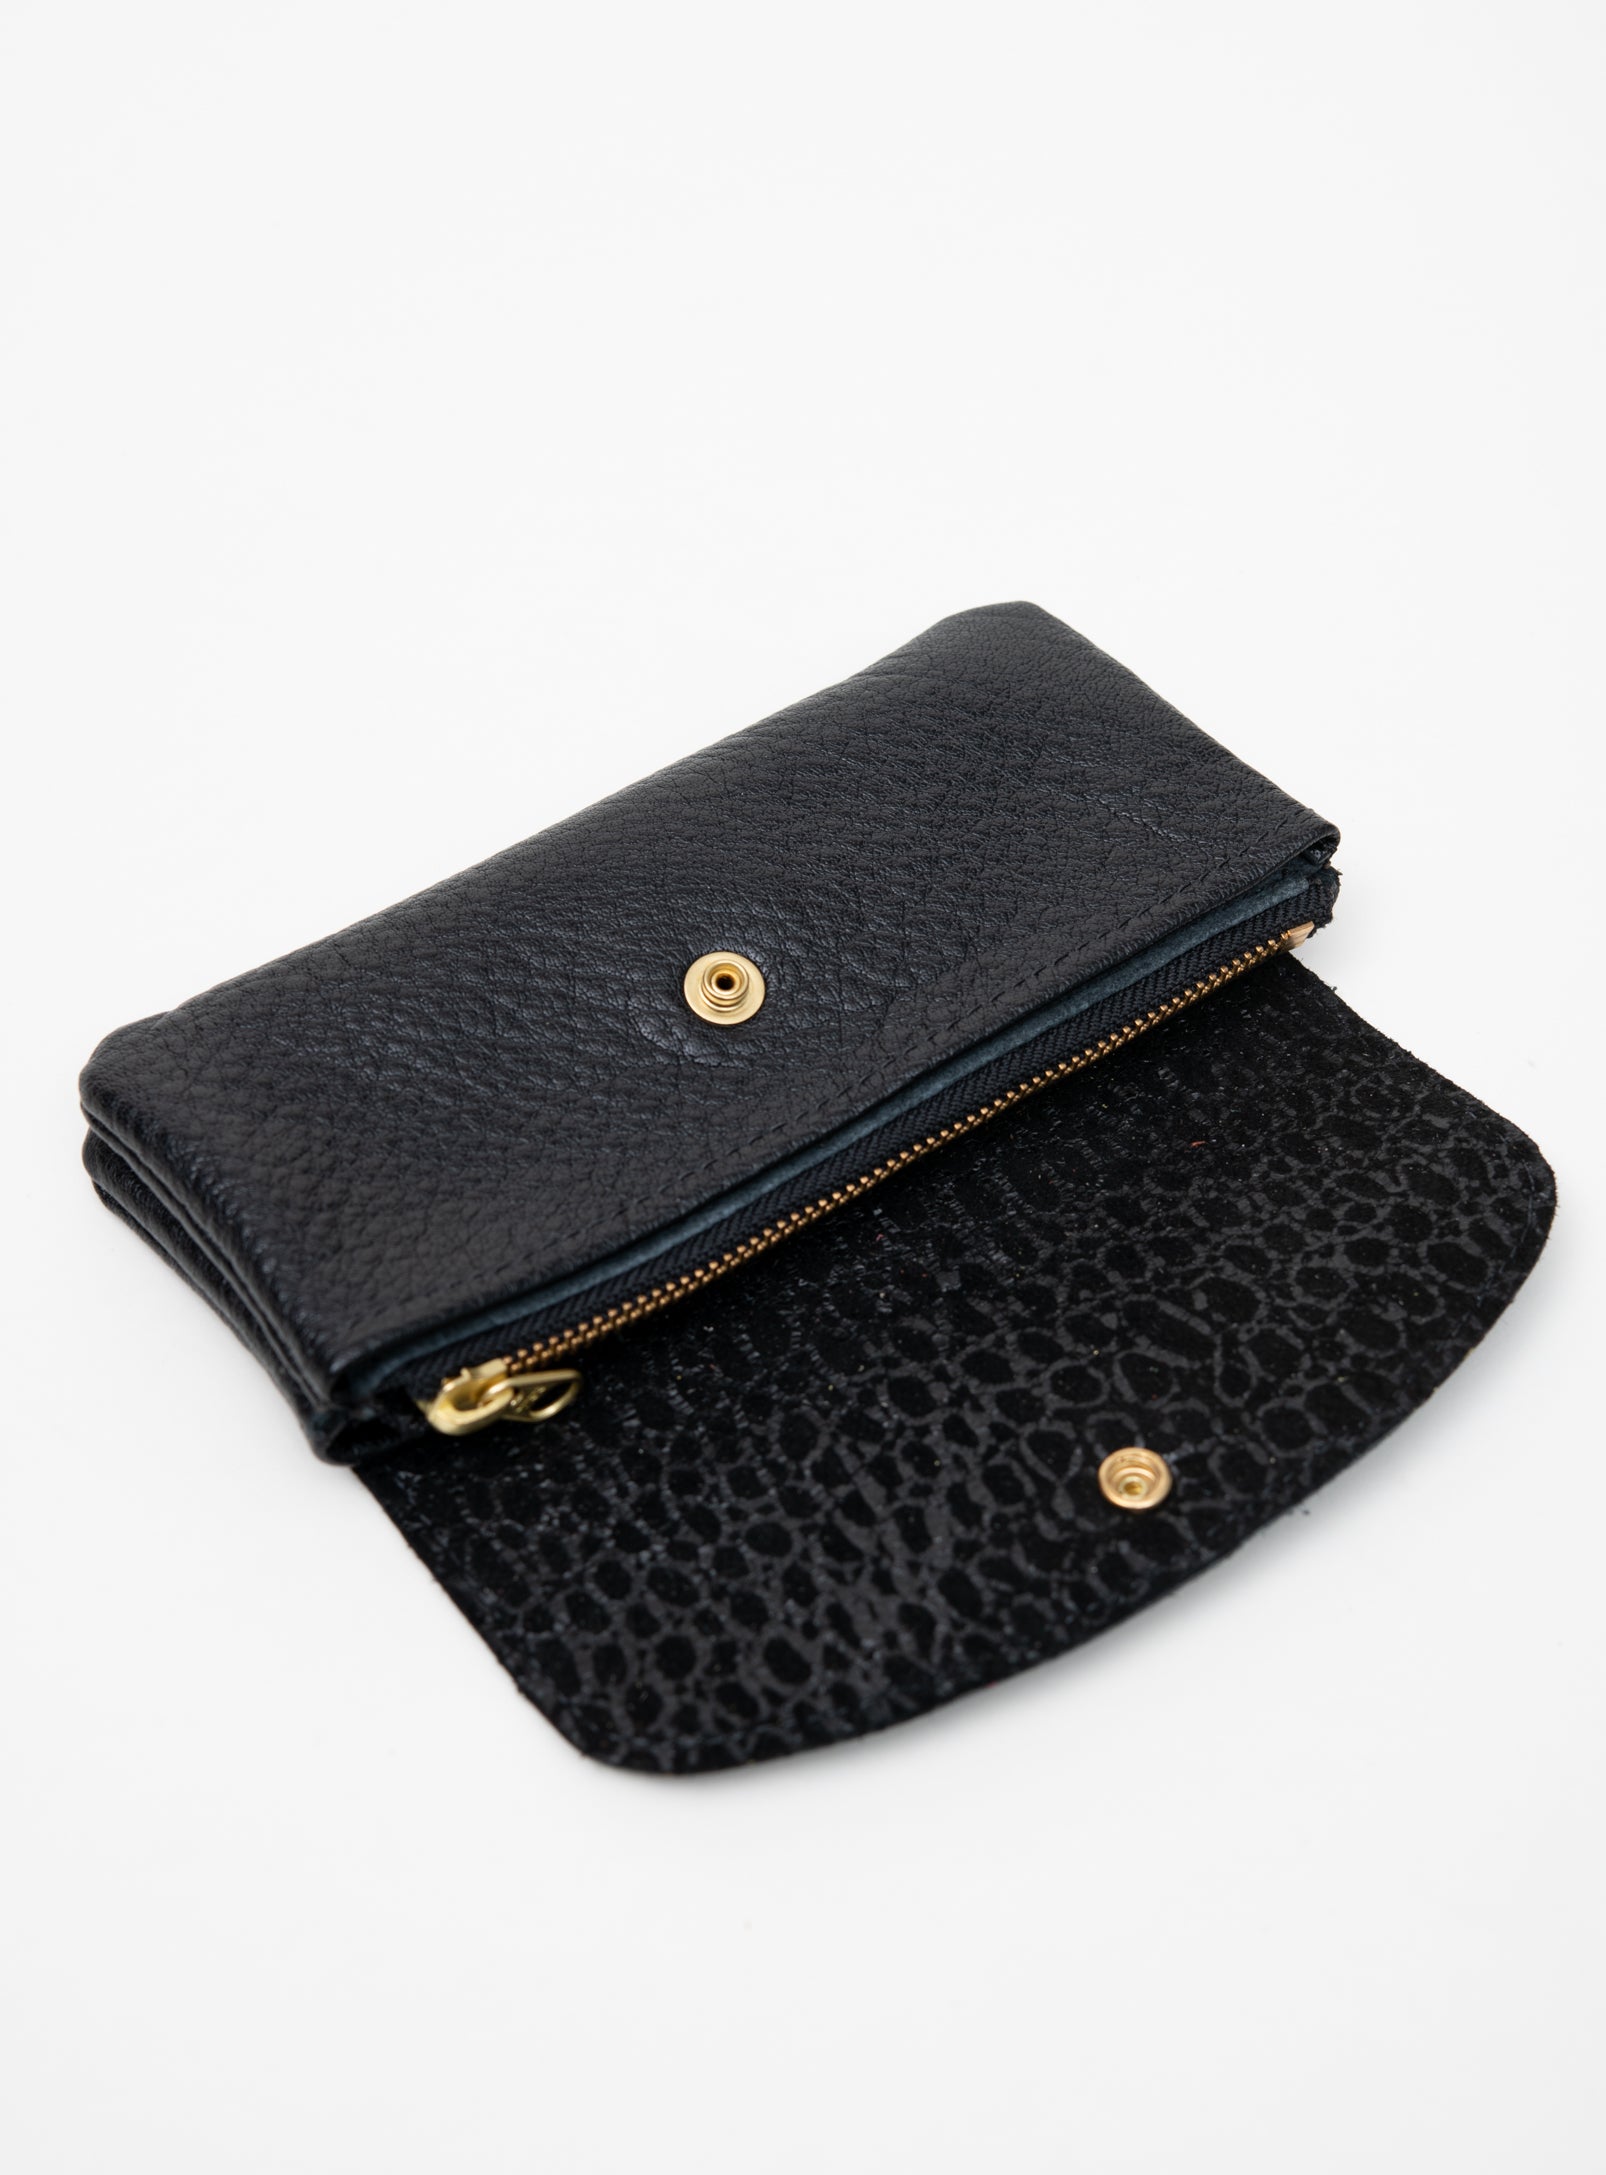 Veinage Minimalist black leather wallet MARQUETTE model